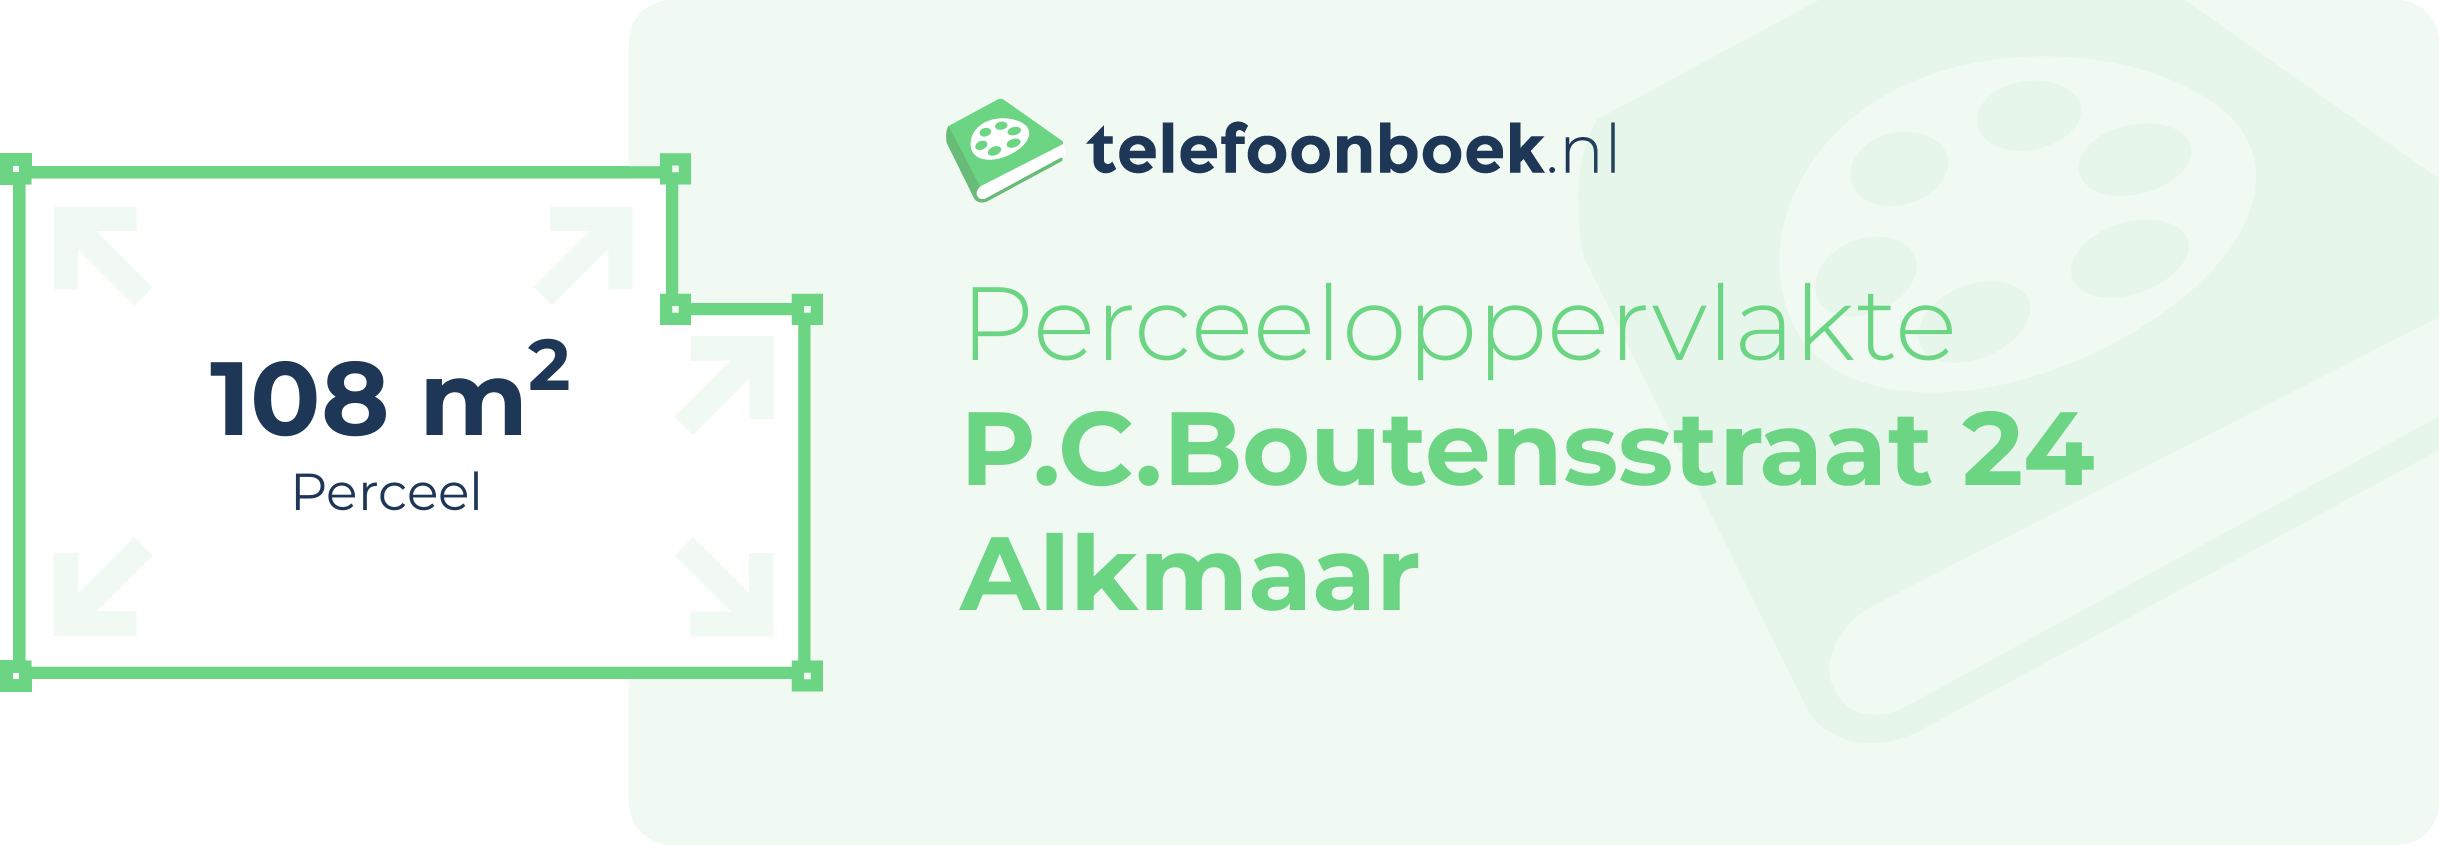 Perceeloppervlakte P.C.Boutensstraat 24 Alkmaar